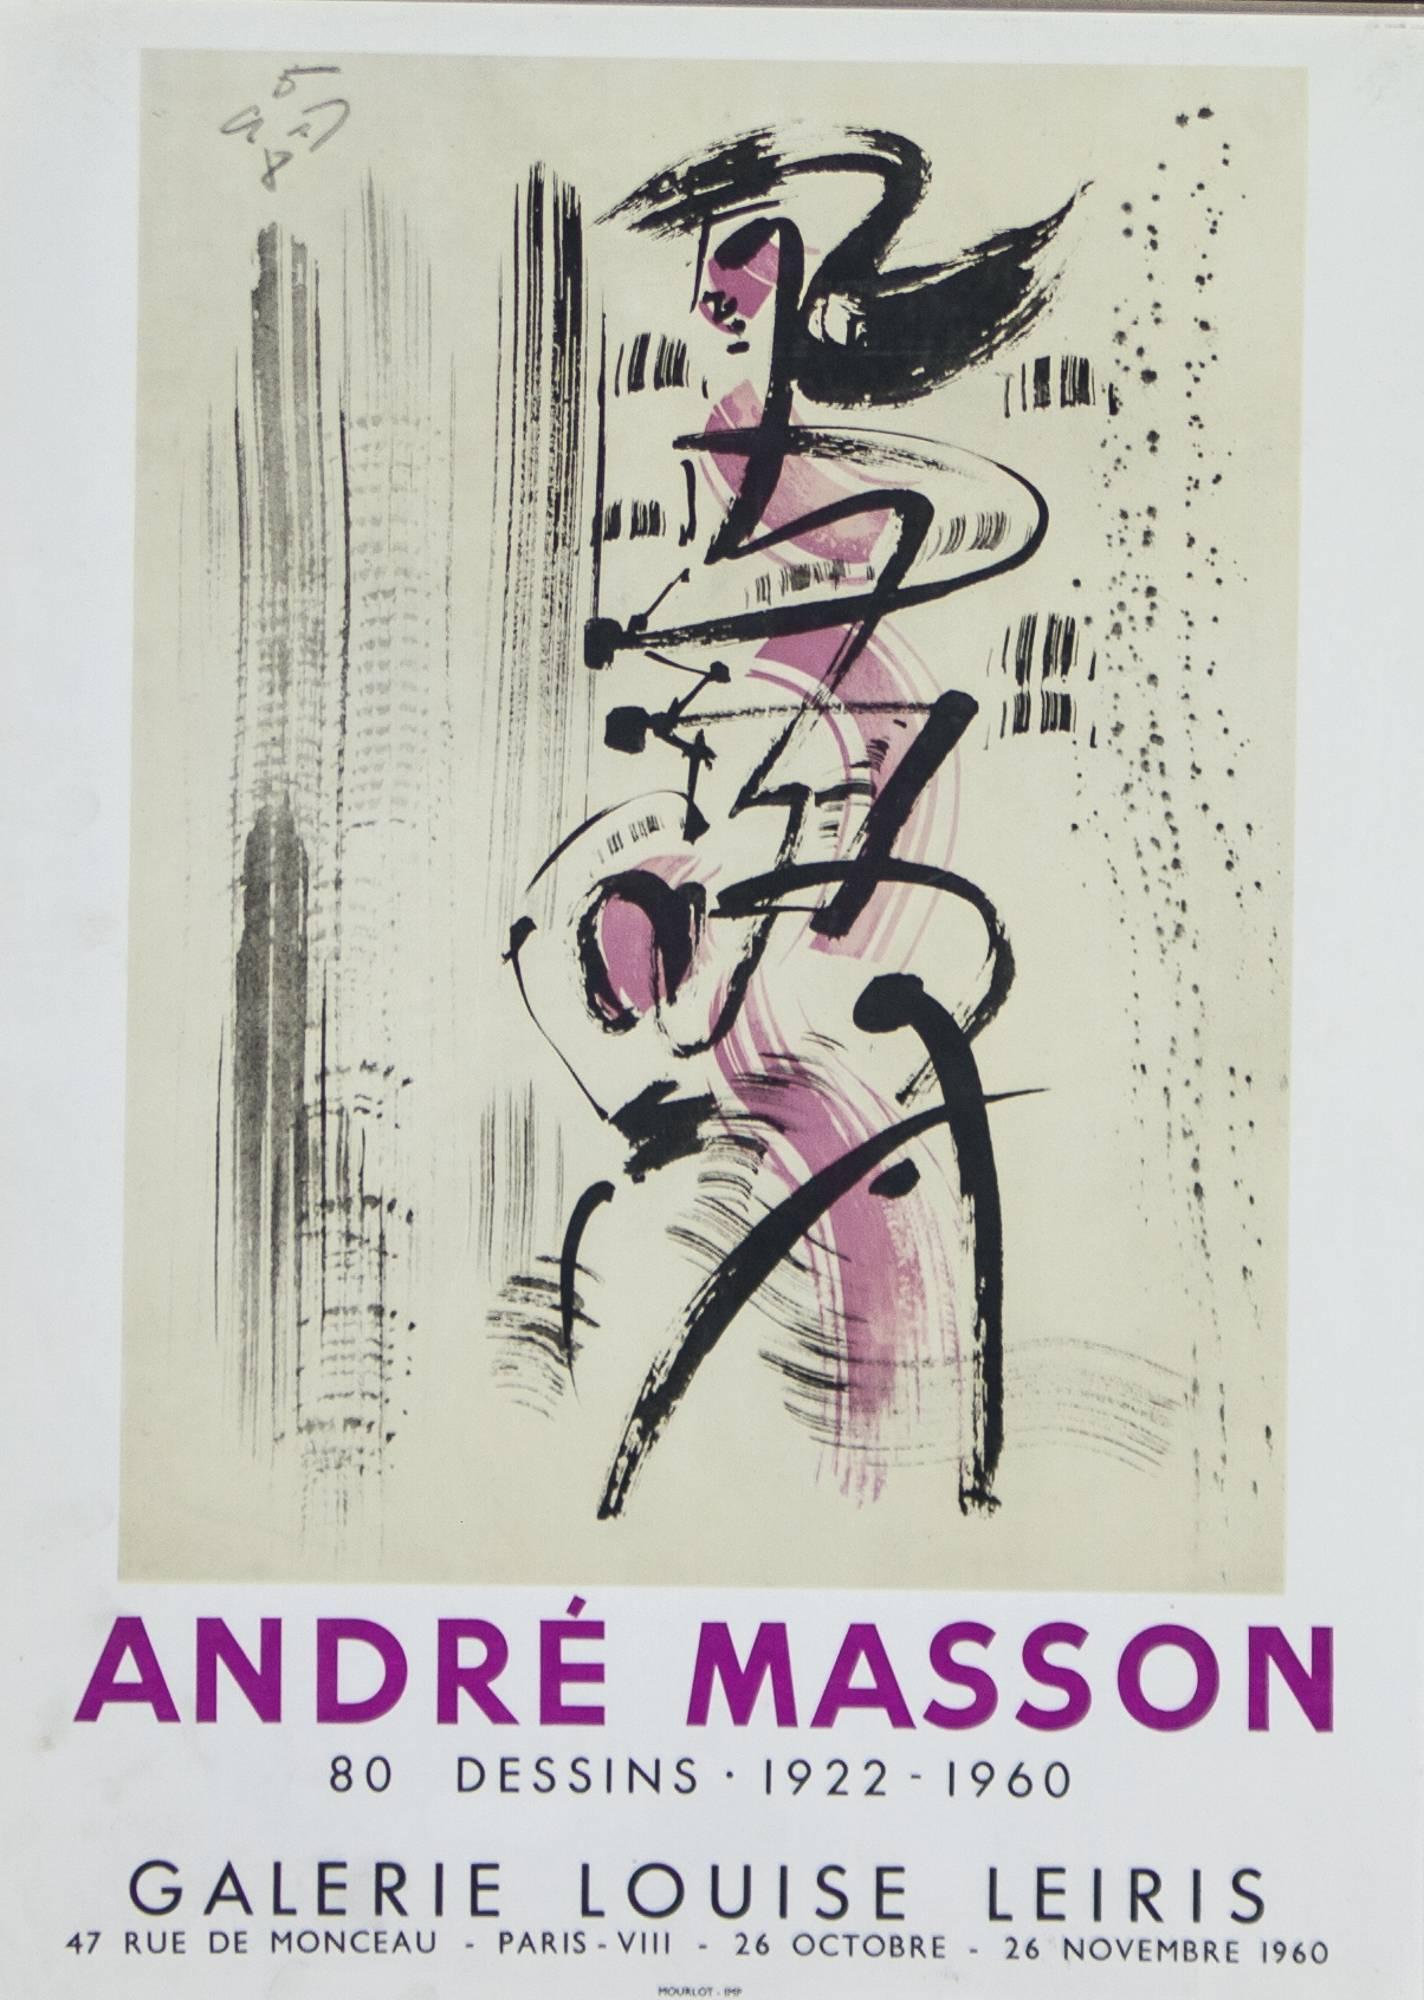 Abstract Print André Masson - Andre Masson 80 Dessins 1922-1960 Galerie Louise Leiris, Paris